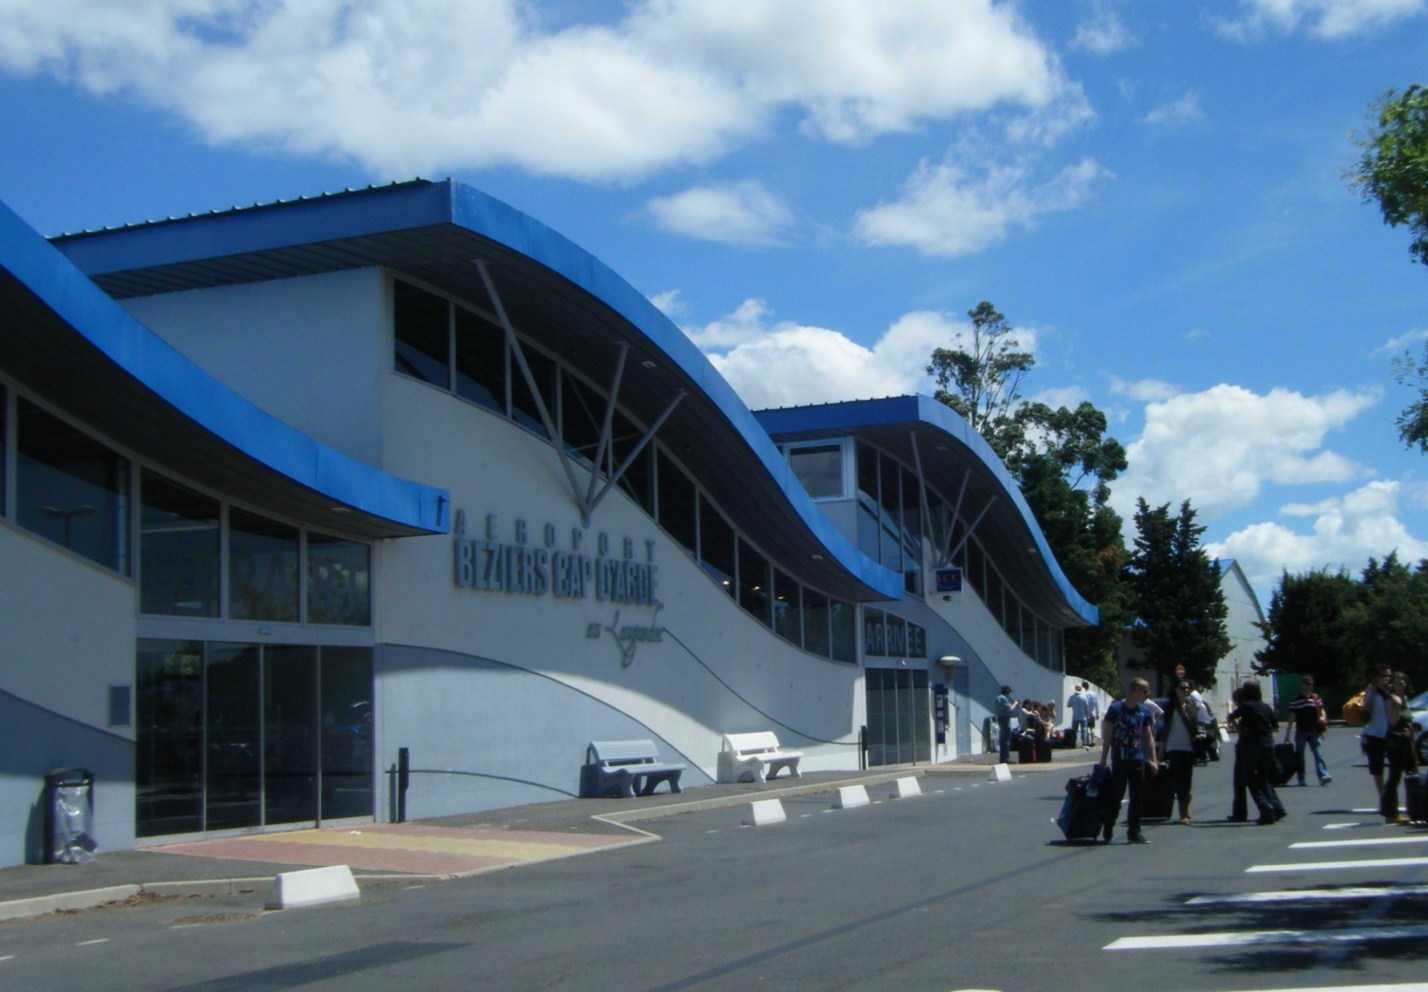 Beziers Cap d'Agde Airport